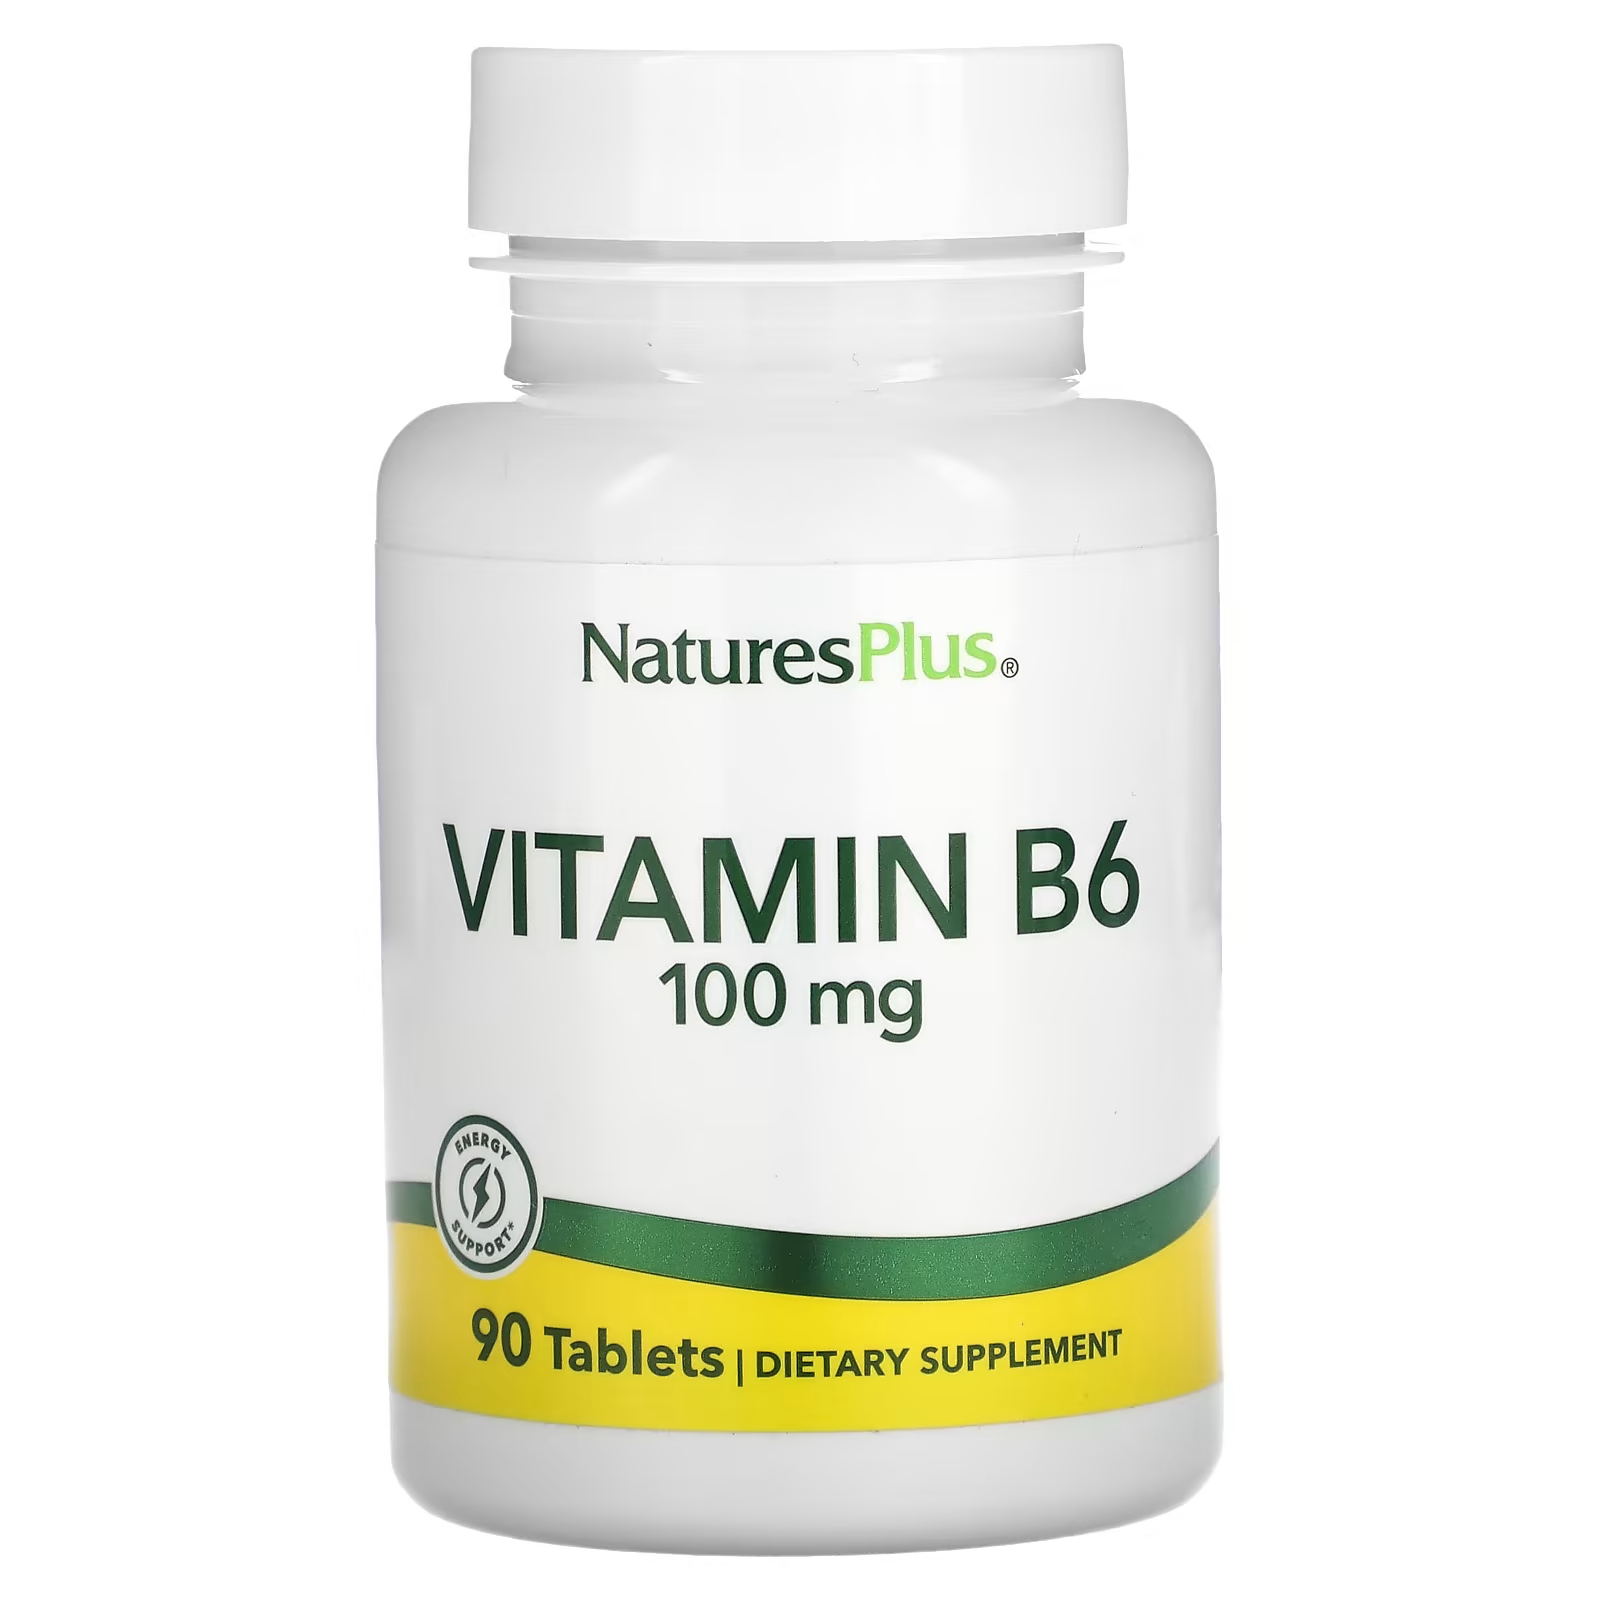 Биологически активная добавка NaturesPlus витамин B-6, 100 мг., 90 таблеток биологически активная добавка swanson ниацин пролонгированное высвобождение 500 мг 90 таблеток